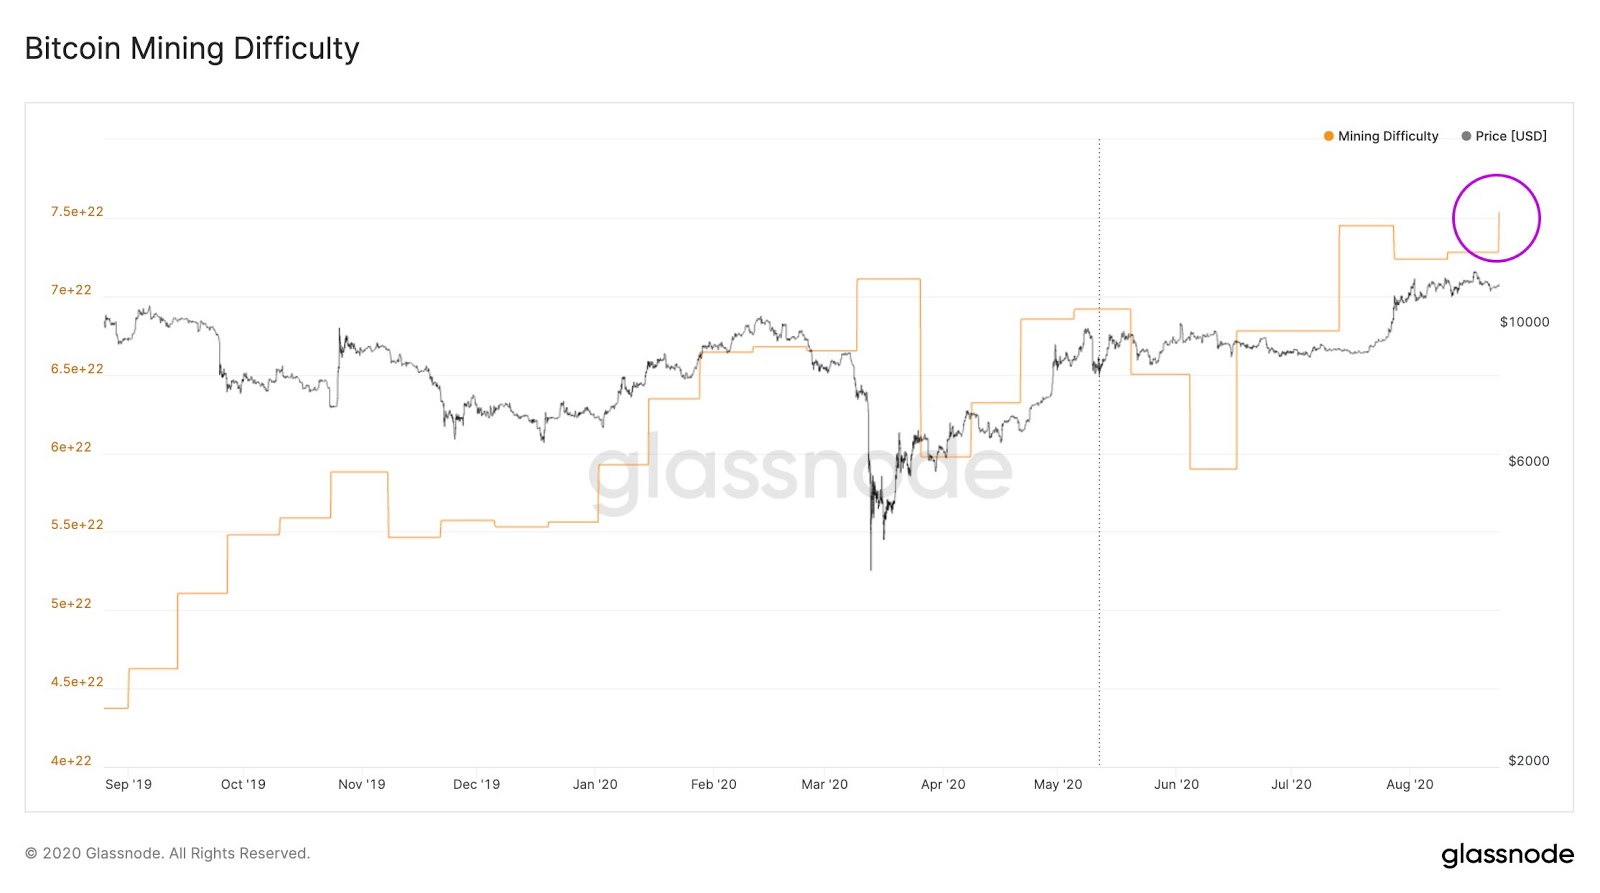 Bitcoin mining difficulty alongside BTC price. Source: Glassnode